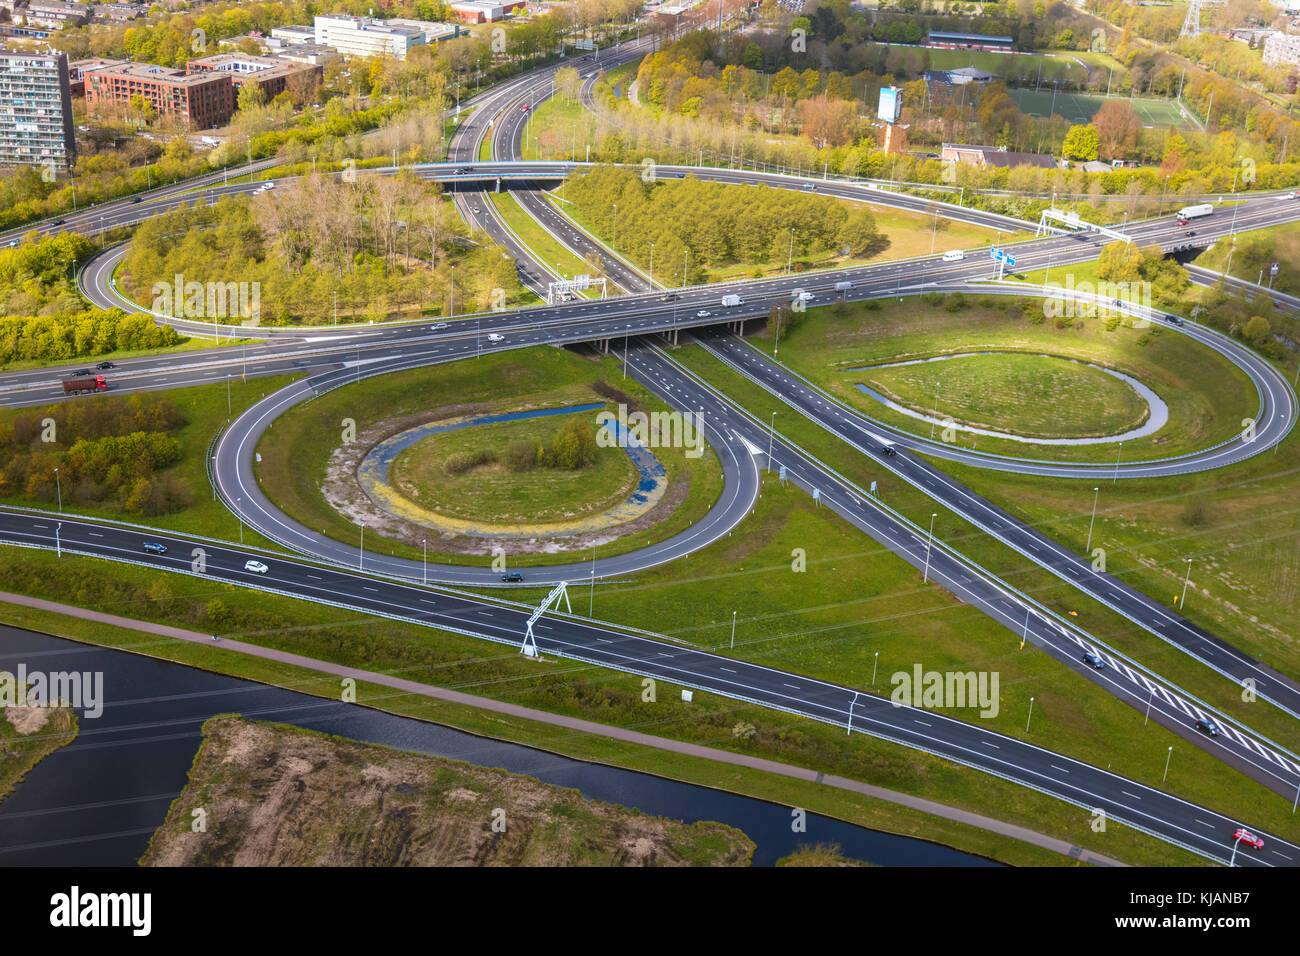 Vista aerea di incroci stradali, nei pressi di amsterdam, Paesi Bassi Foto Stock